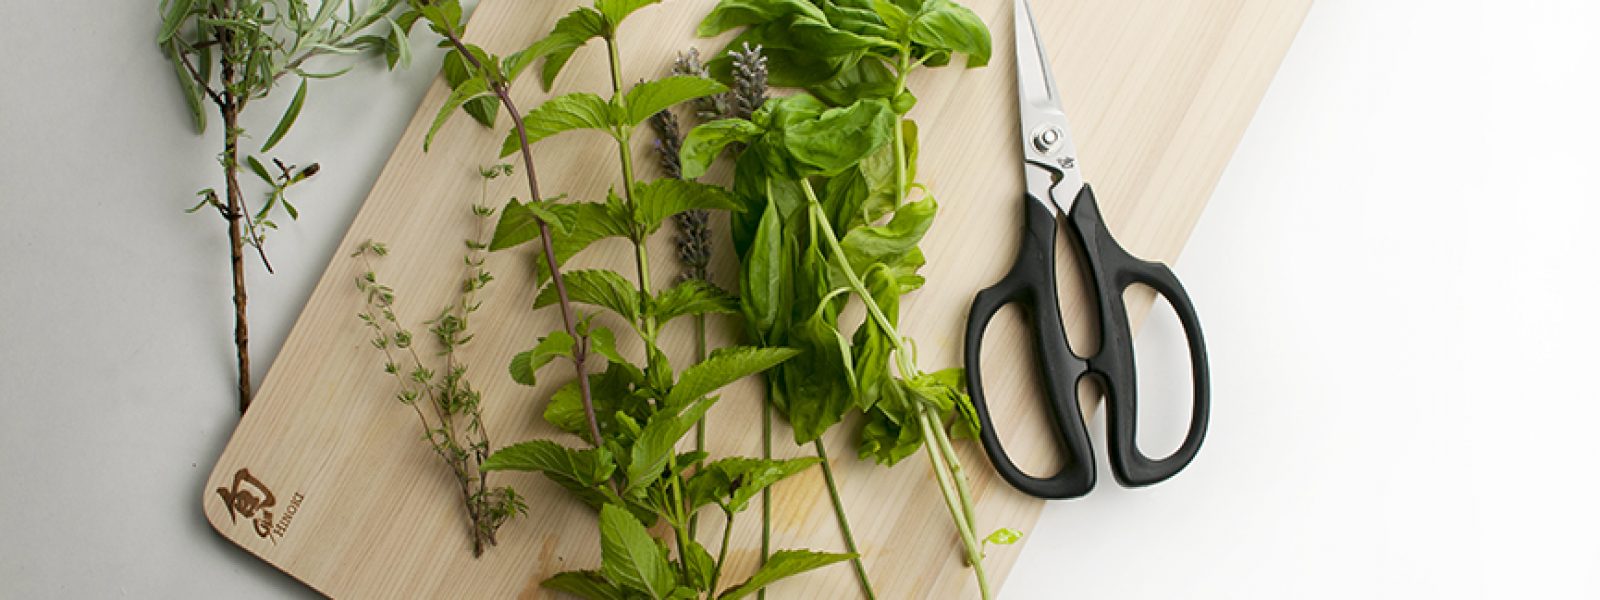 3 Ways to Use Kitchen Scissors - wikiHow